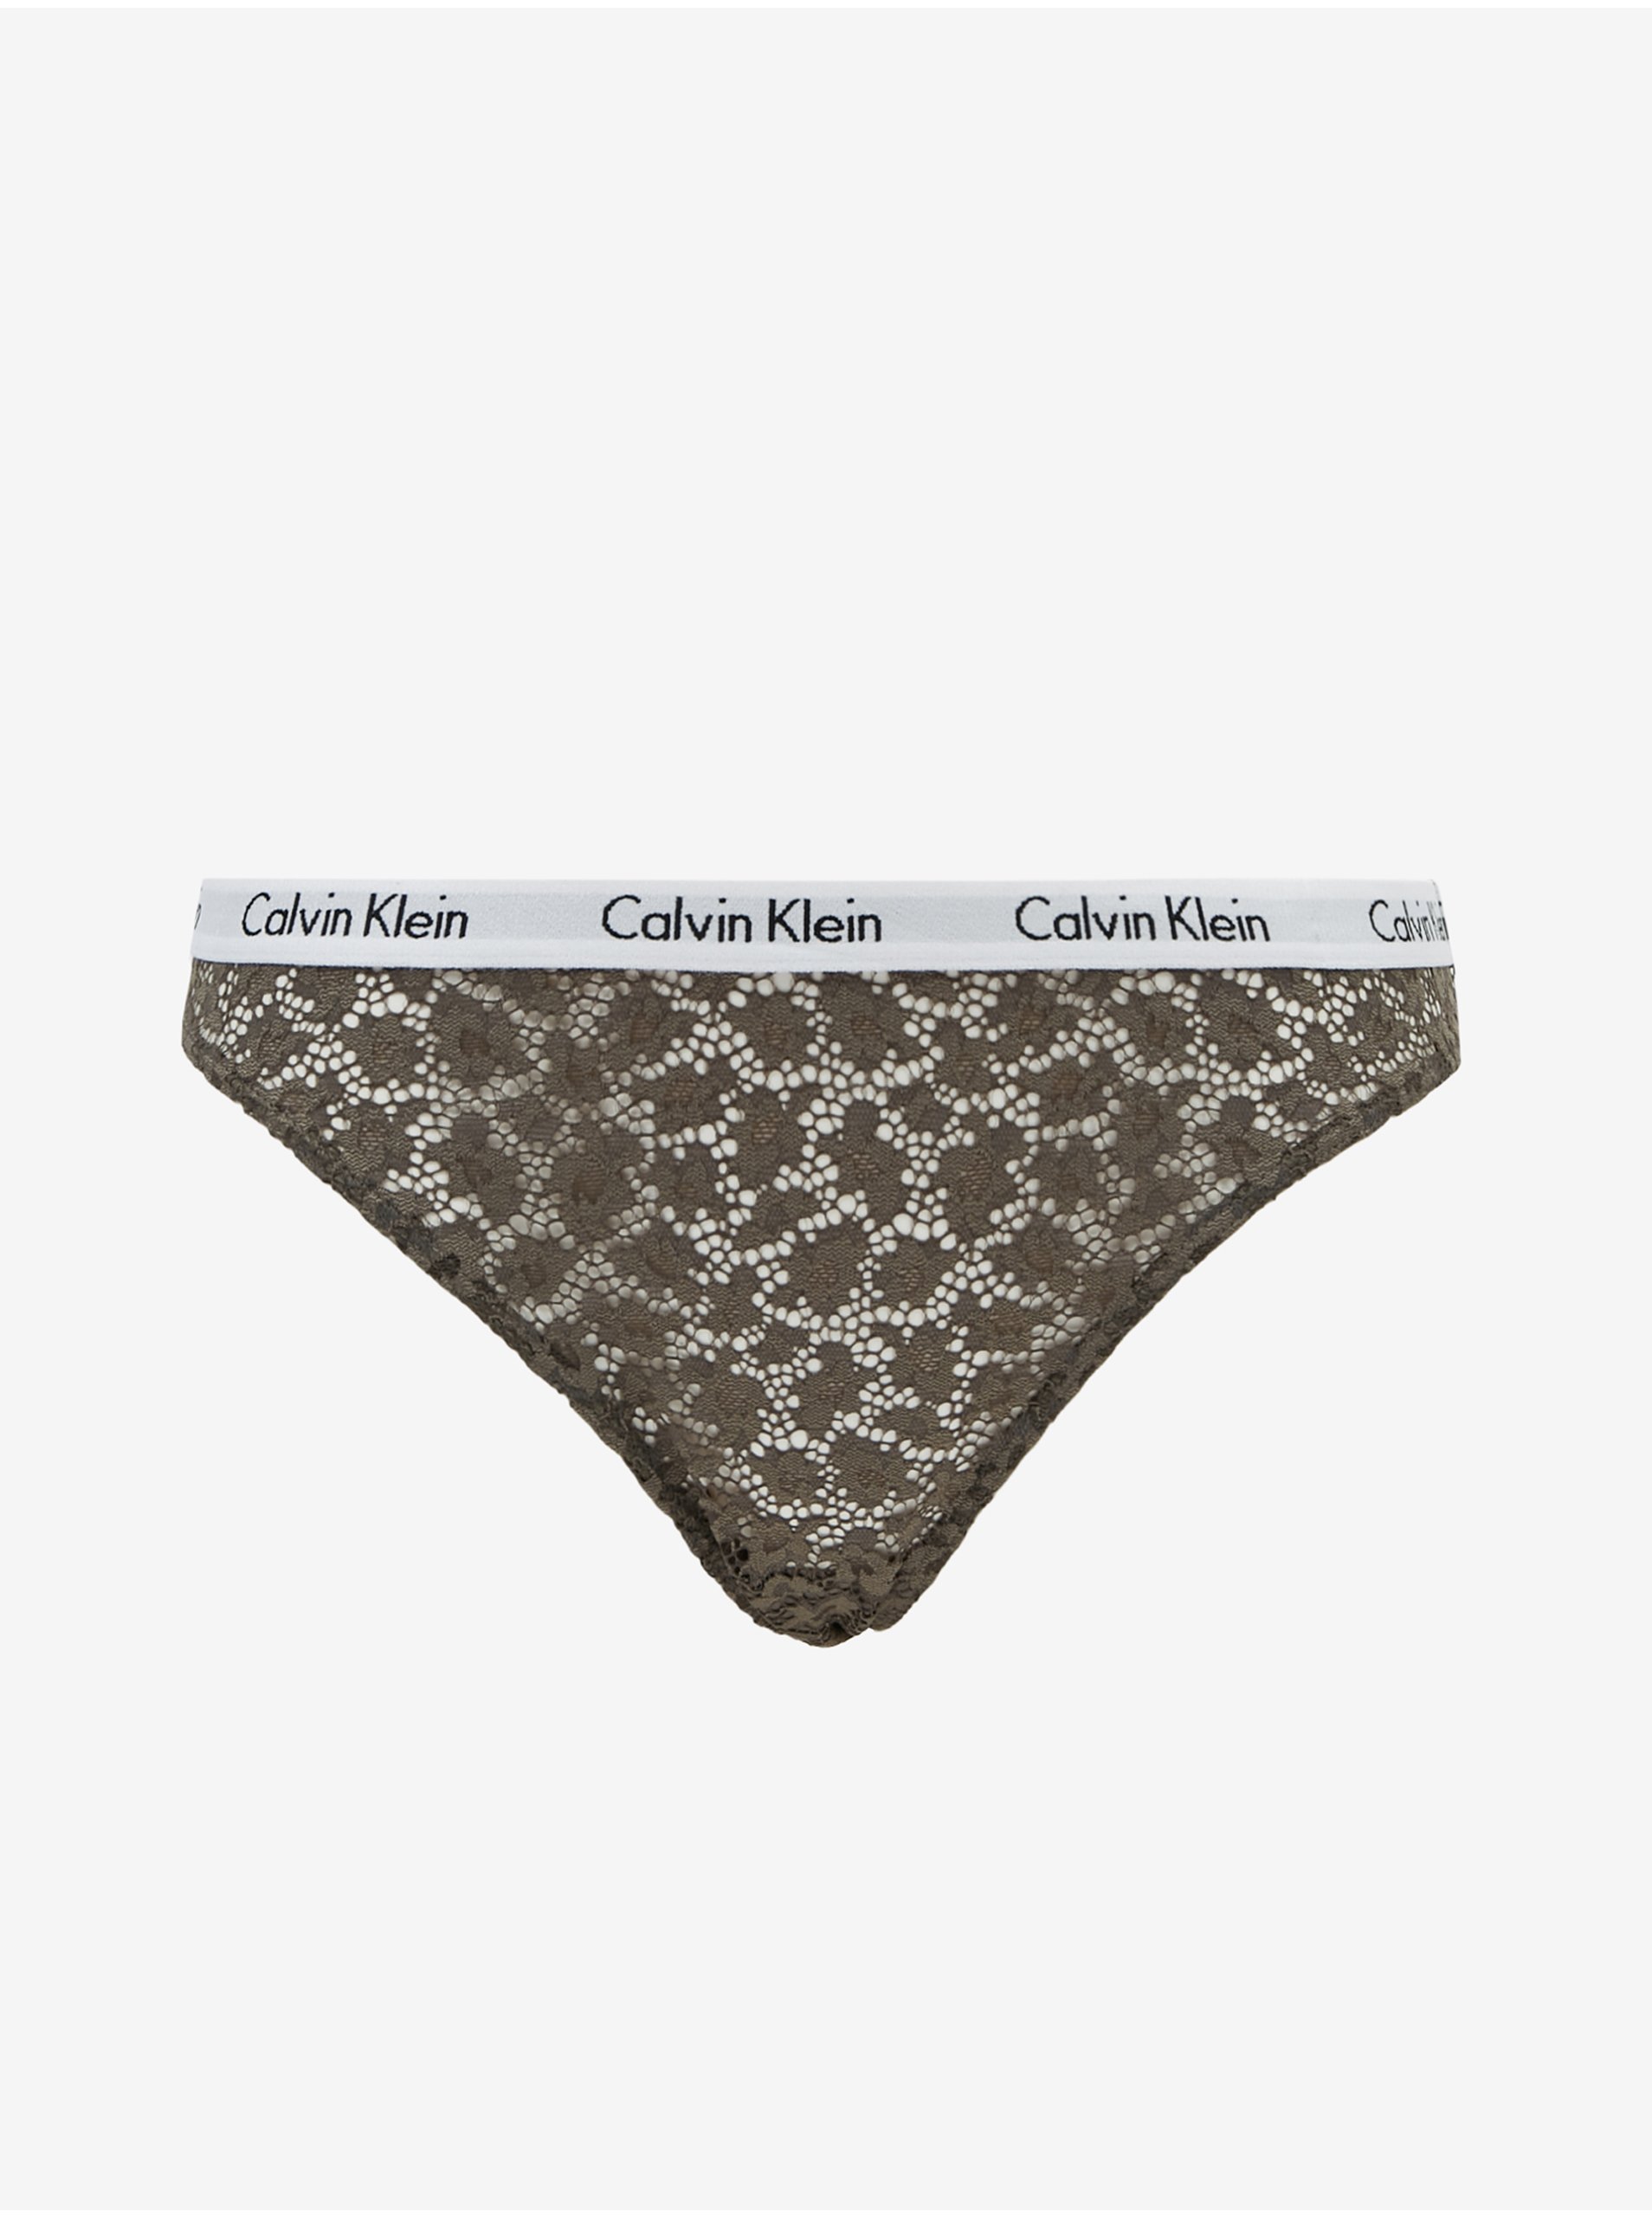 E-shop Tmavě hnědé krajkové kalhotky Calvin Klein Underwear